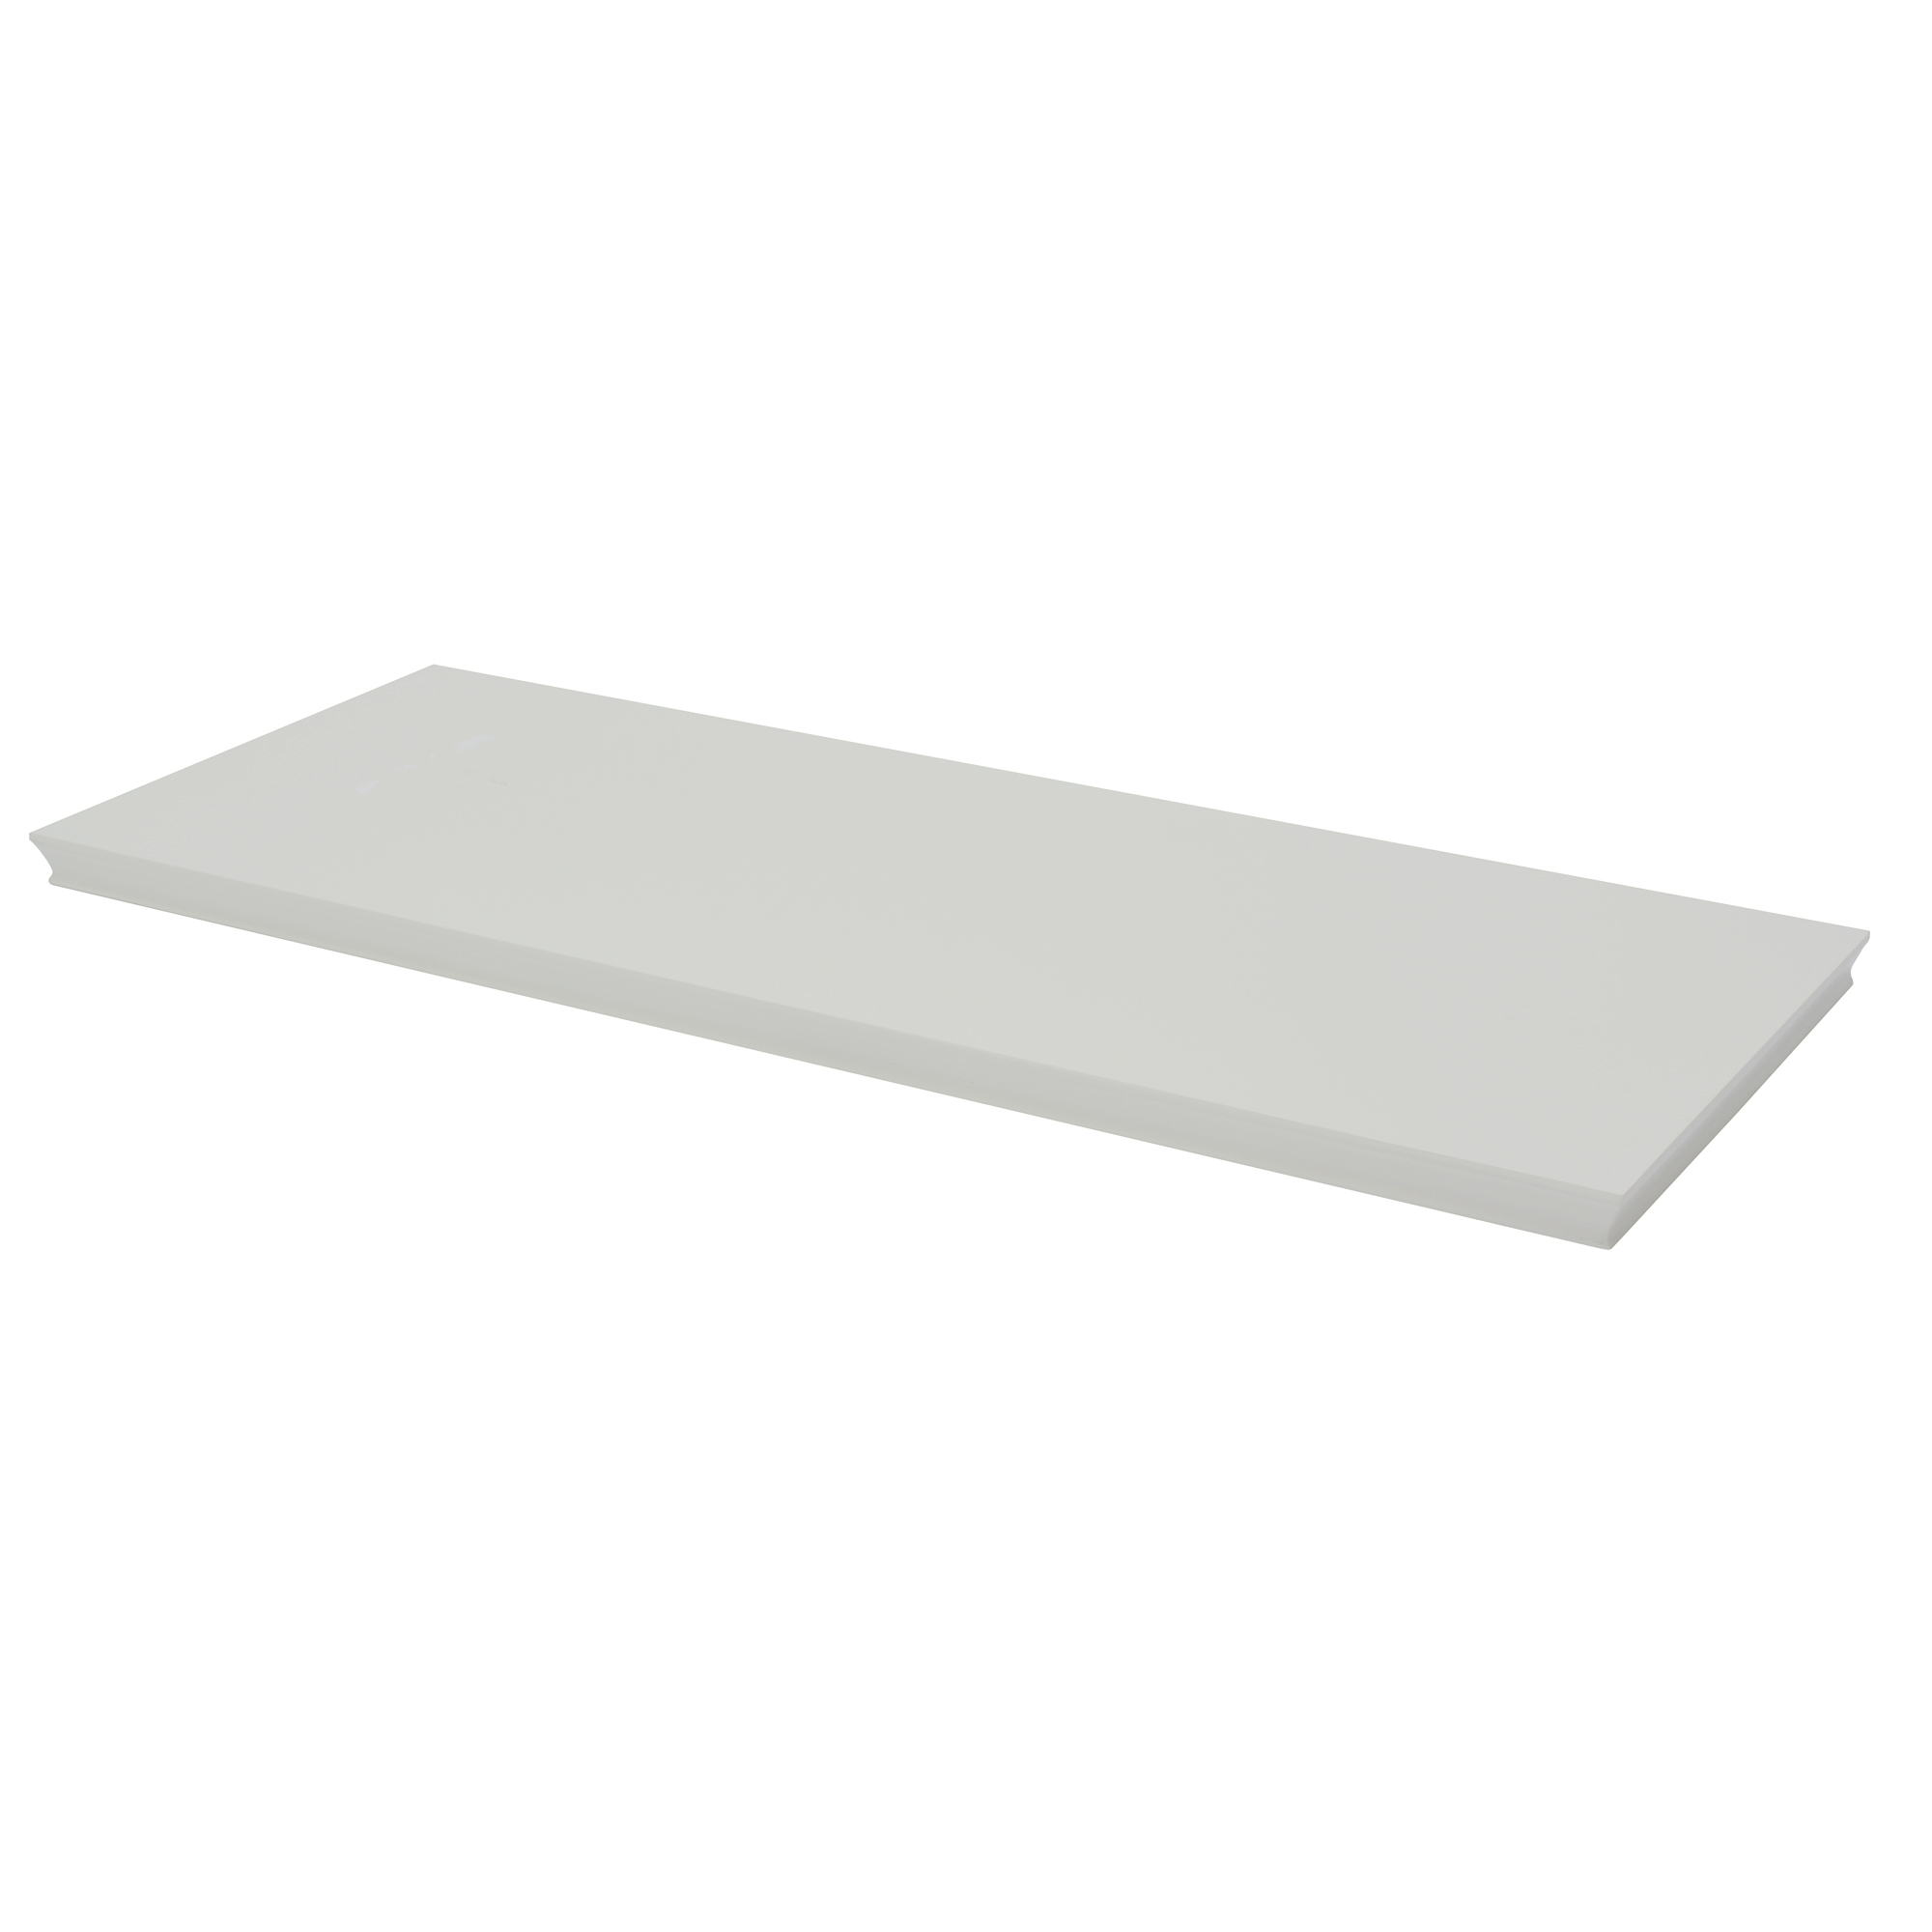 Pekodom Provence Board White Floating Wall Shelf 600 x 235 x 20mm RRP £9.99 CLEARANCE XL £2.50